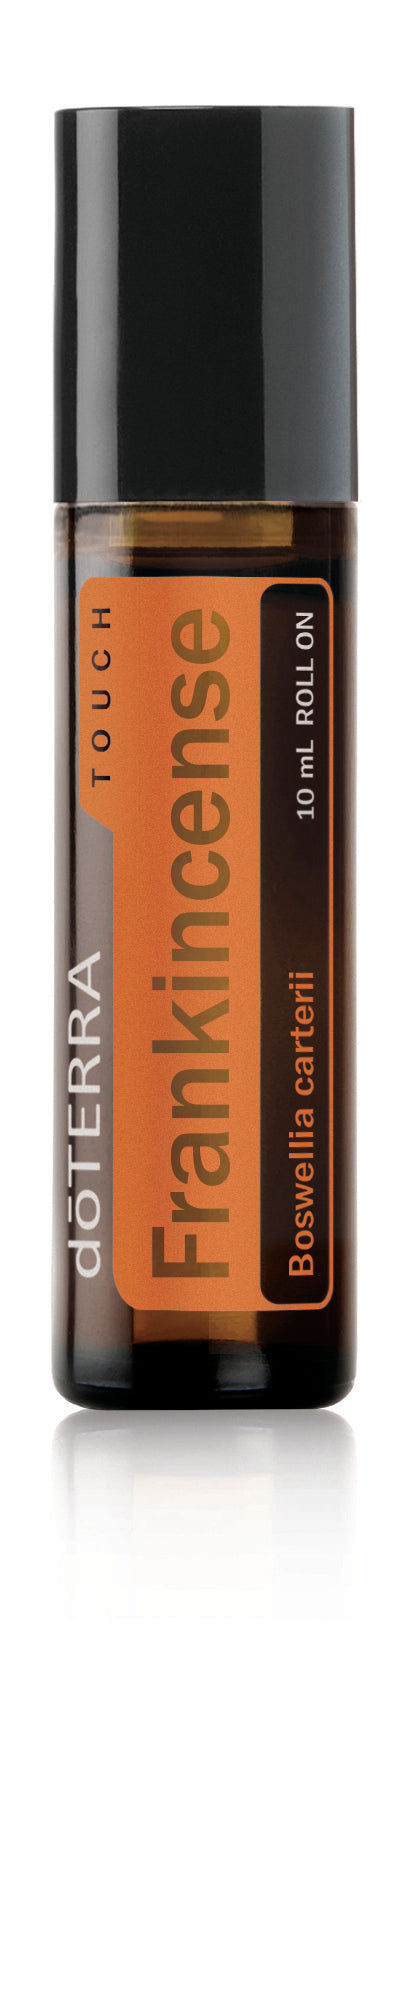 doTERRA Frankincense Essential Oil